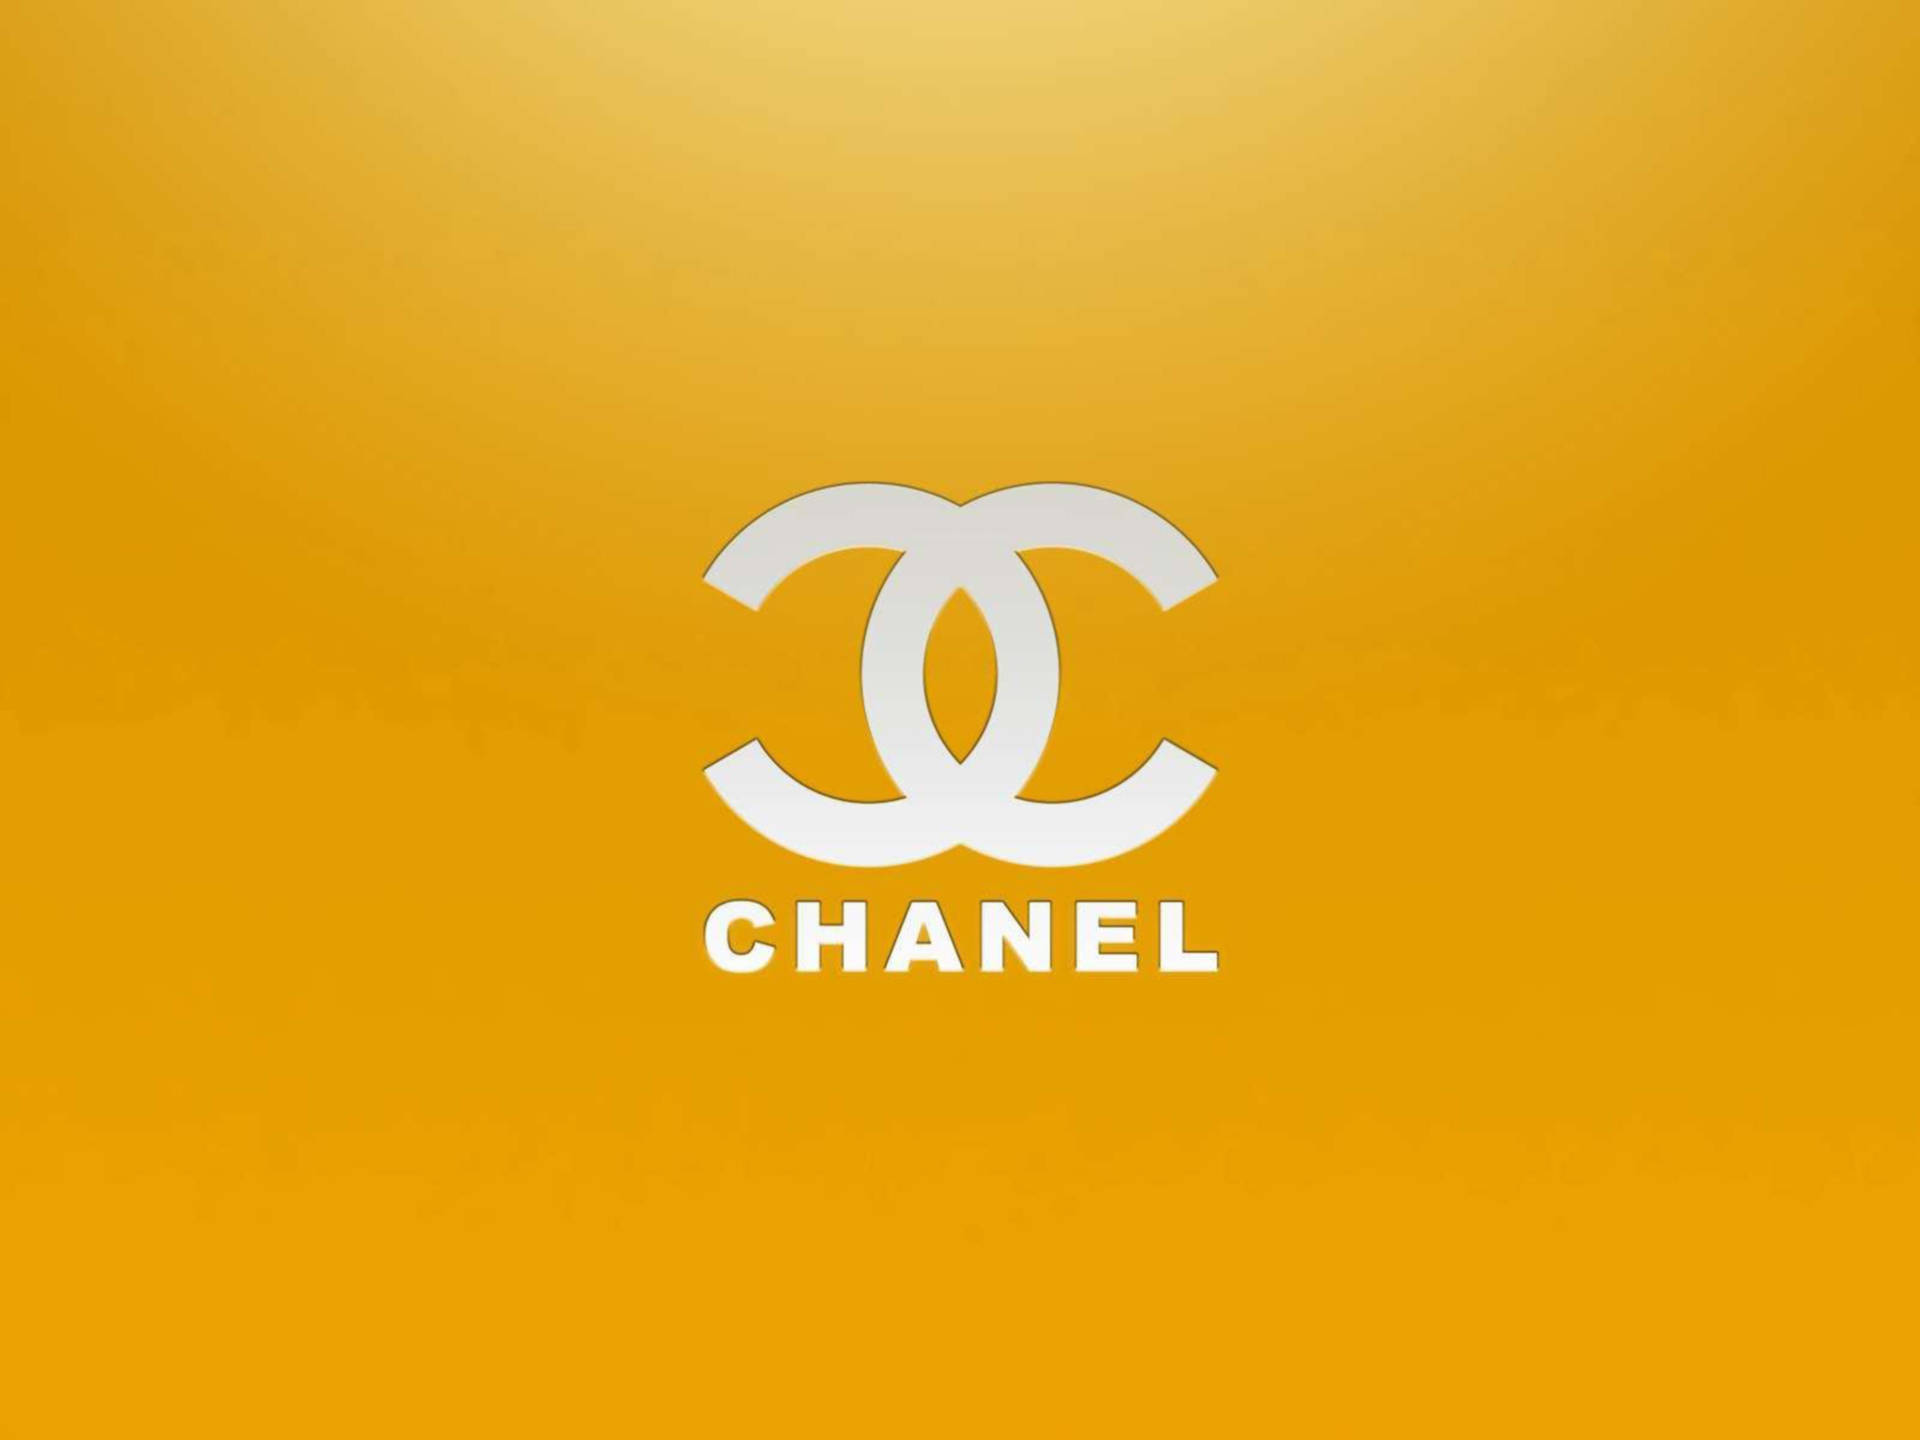 White Chanel Logo On Golden Yellow